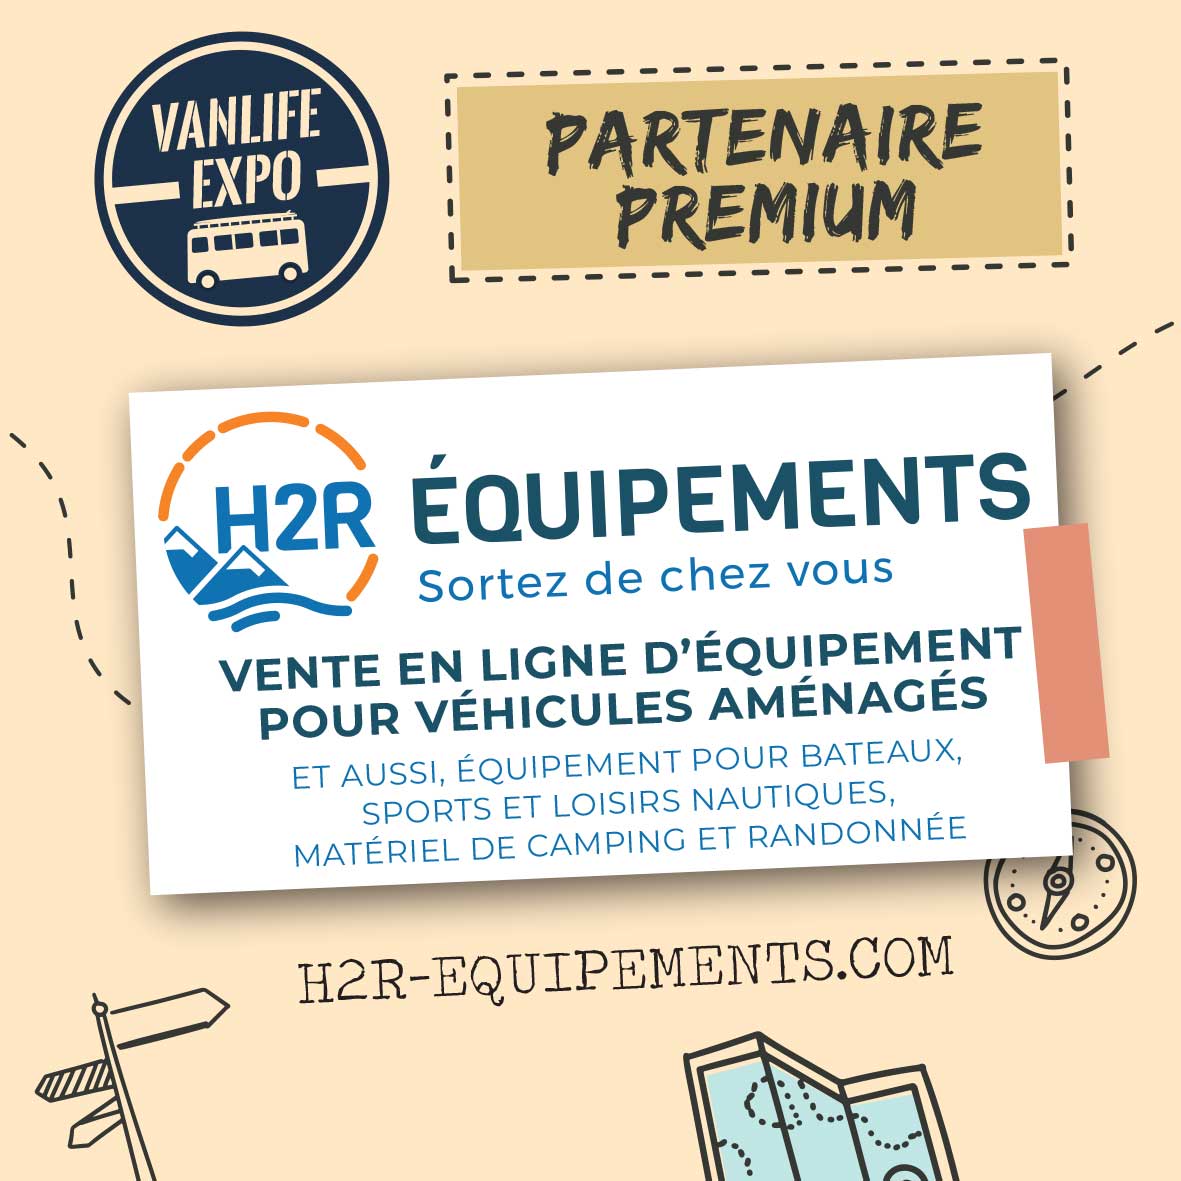 Featured image for “H2R Equipements<br>Partenaire Premium”